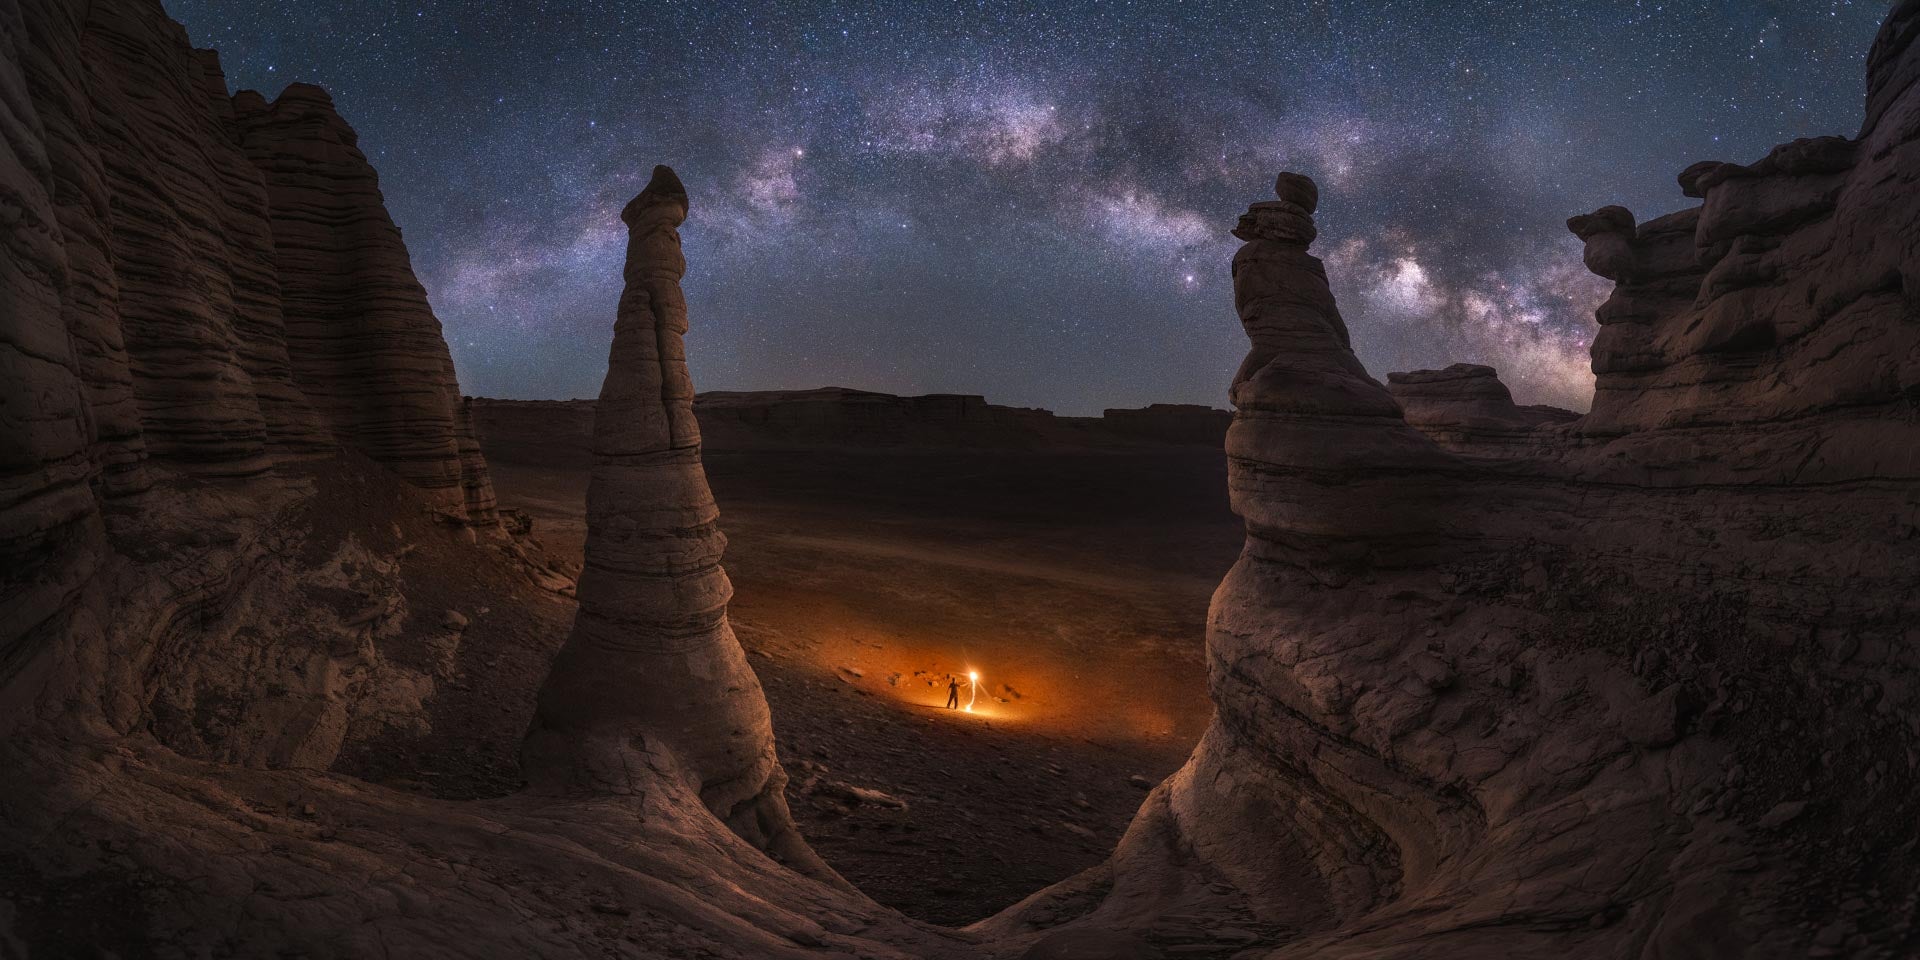 The galaxy above an eroded outcrop of the Dahaidao Desert, China. (Photo: Jinyi He)